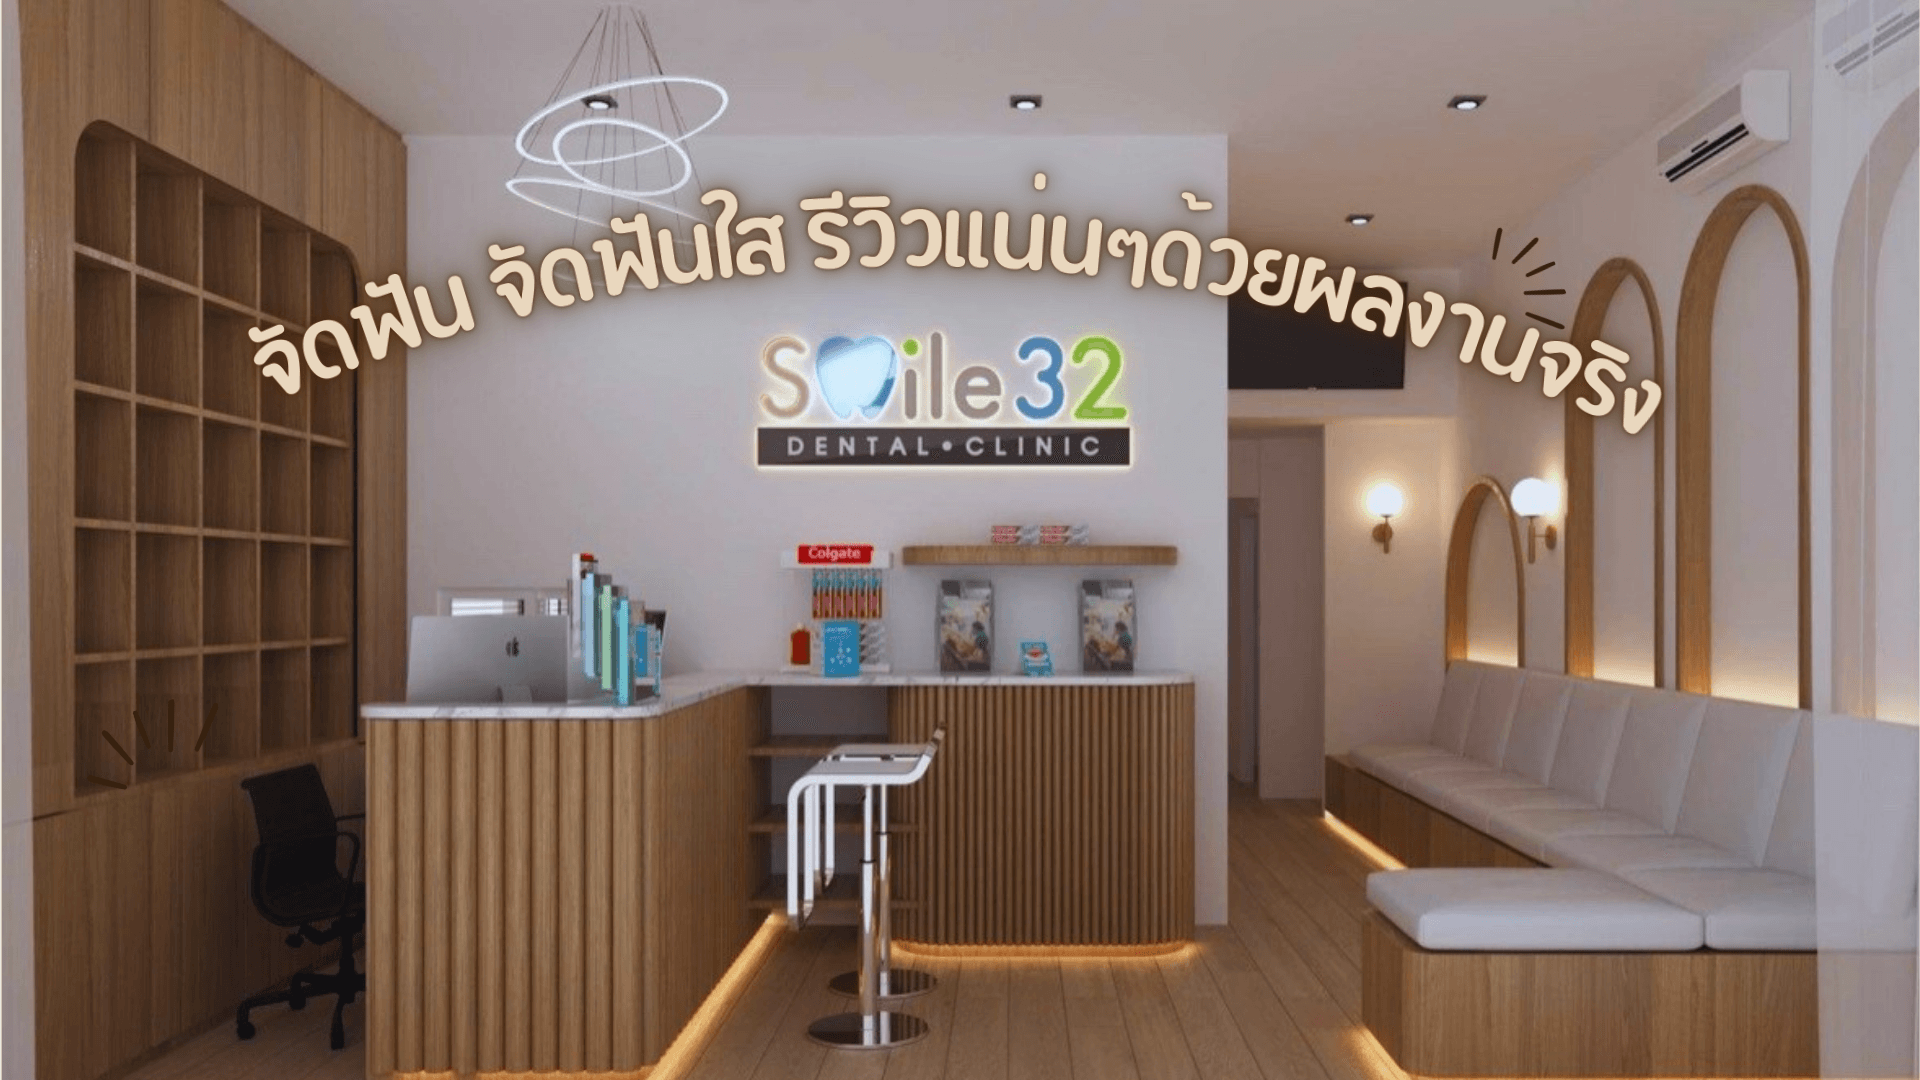 Smile32 Dental Clinic - ทำฟัน จัดฟัน เชียงใหม่